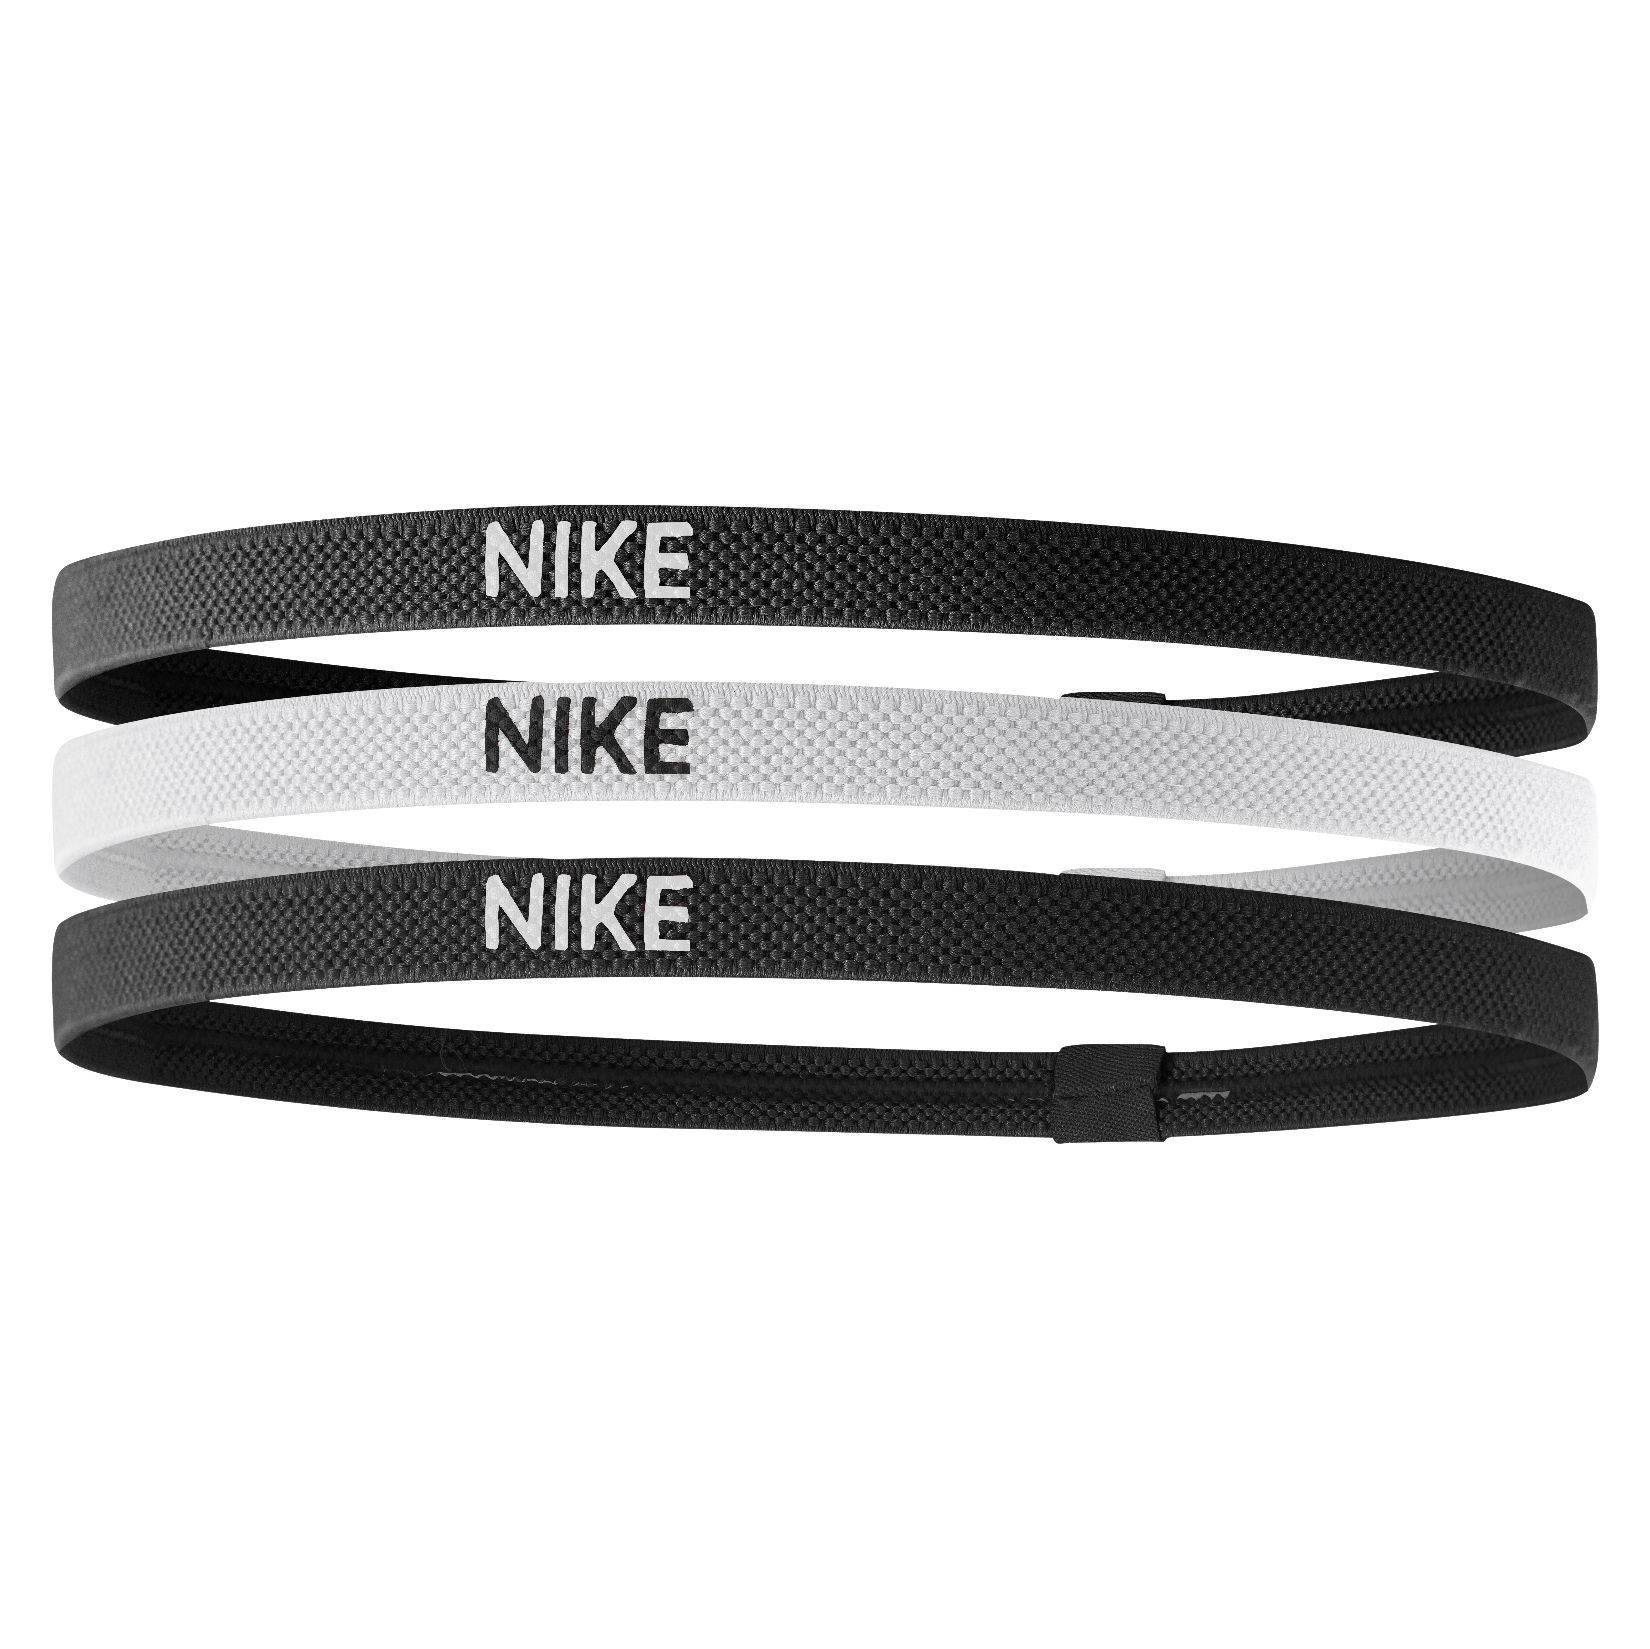 Nike Elastic Hairband 3pk Black-White-Black